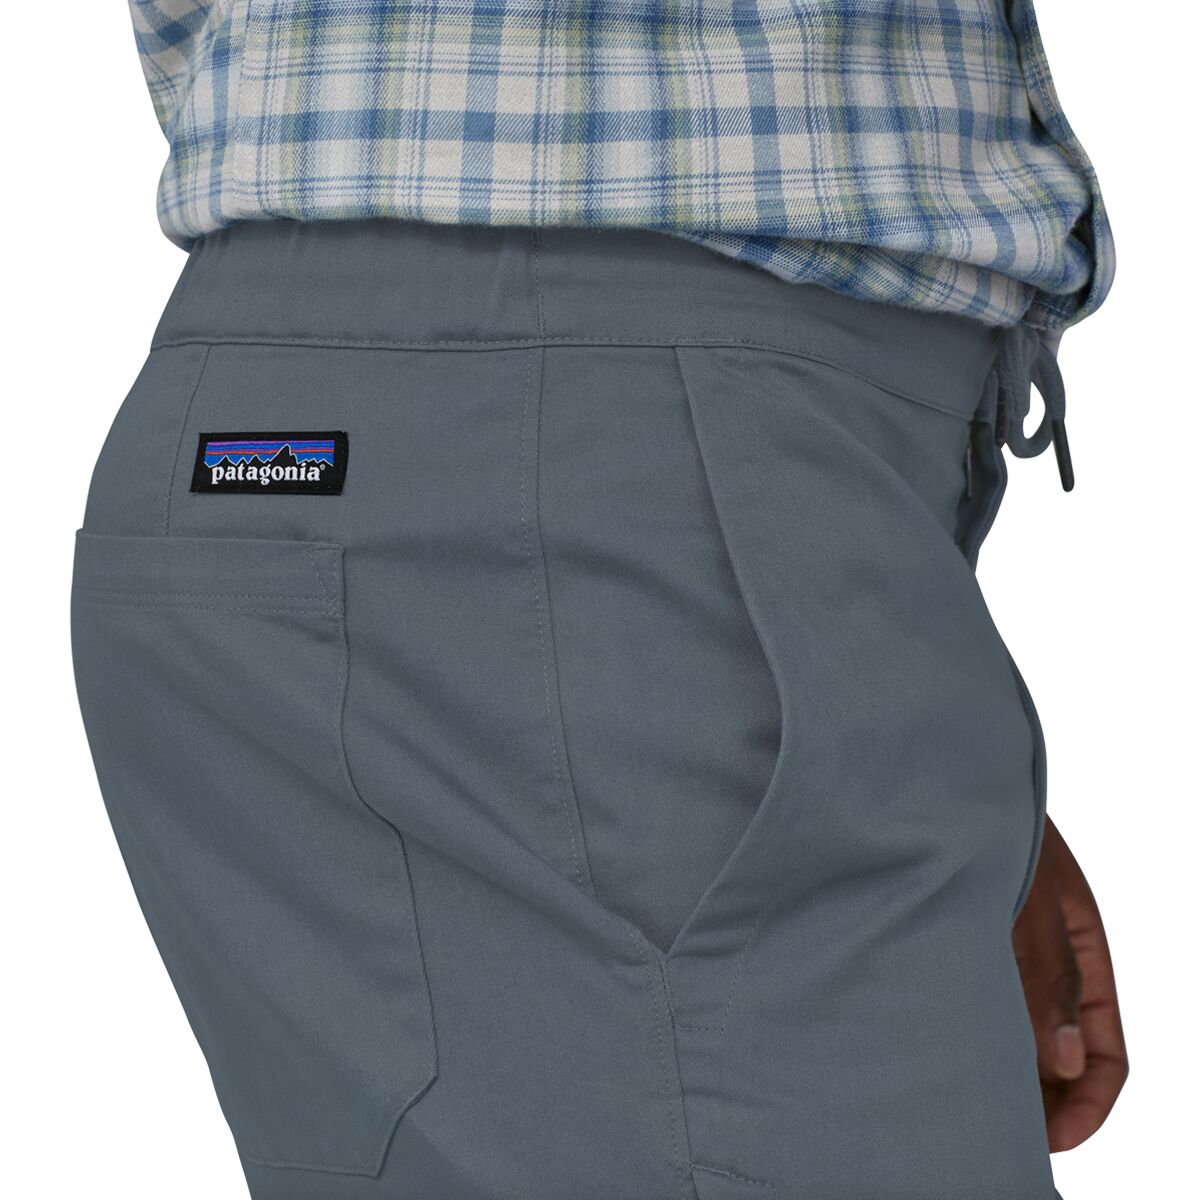 Patagonia Twill Traveler Pants - Casual trousers Men's